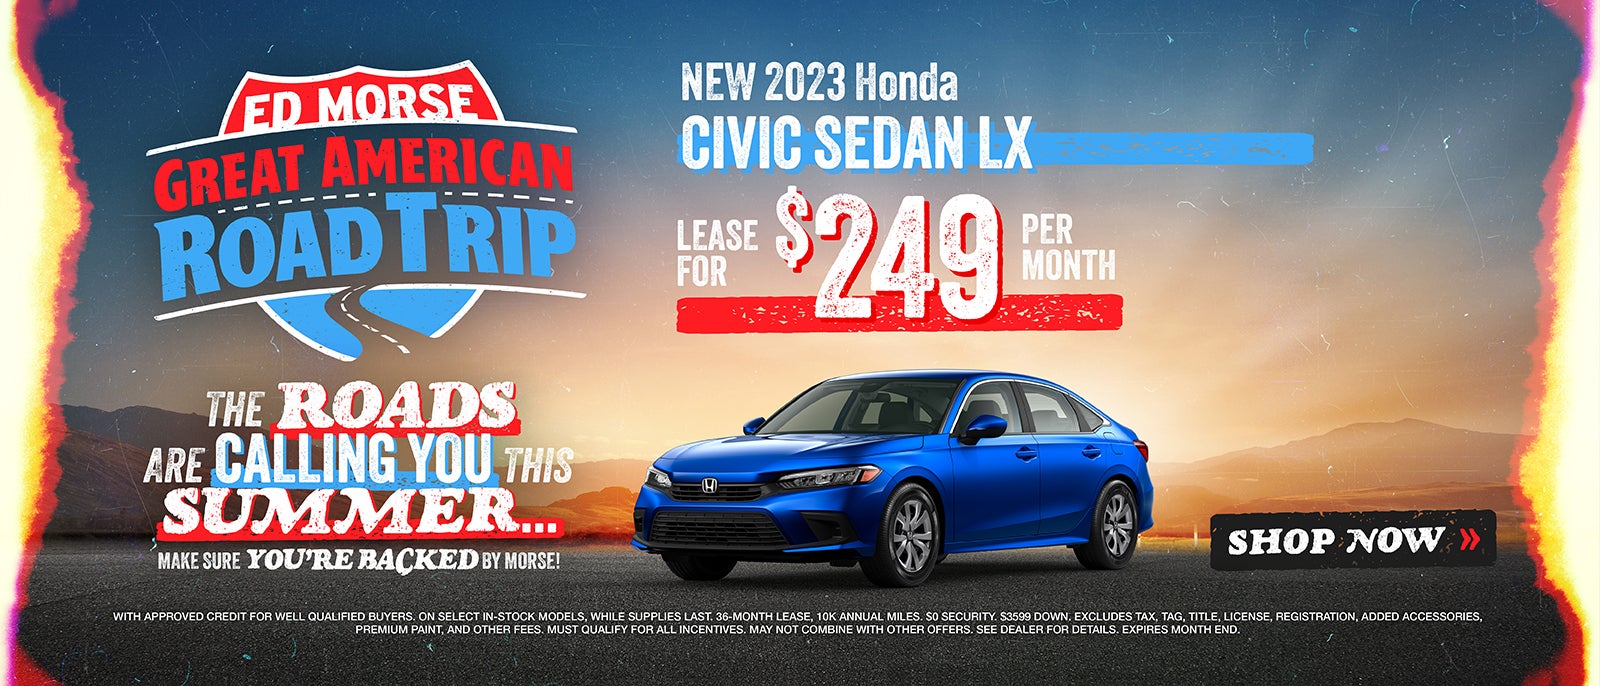 New 2023 Honda Civic Sedan LX Lease for $249 a month